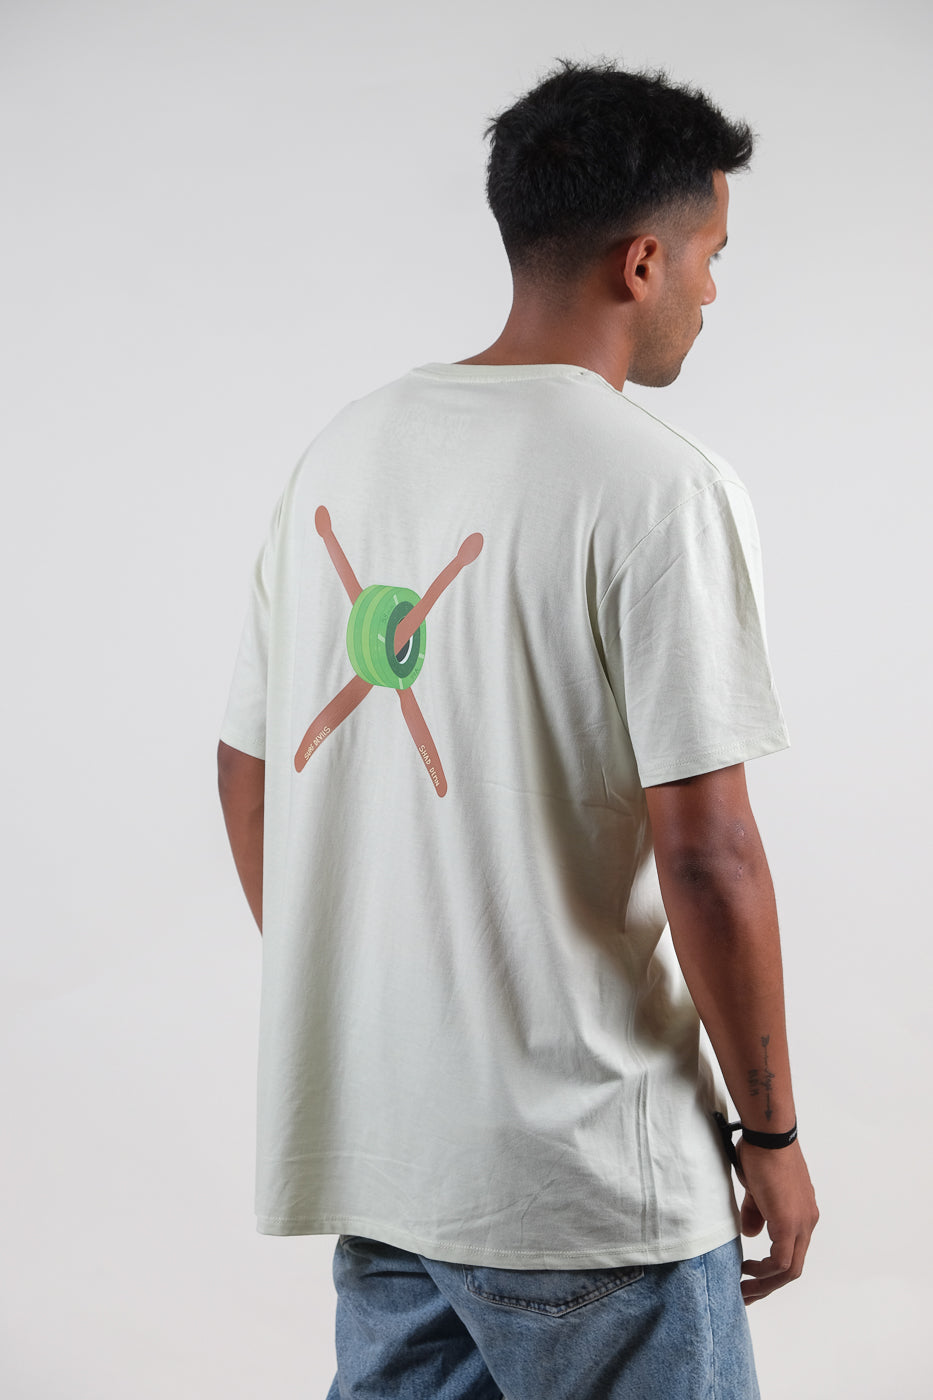 Camiseta SurfDevils X Shad Demn Artist Series Skate | Camisetas de hombre | Camisetas manga corta de hombre | surfdevils.com